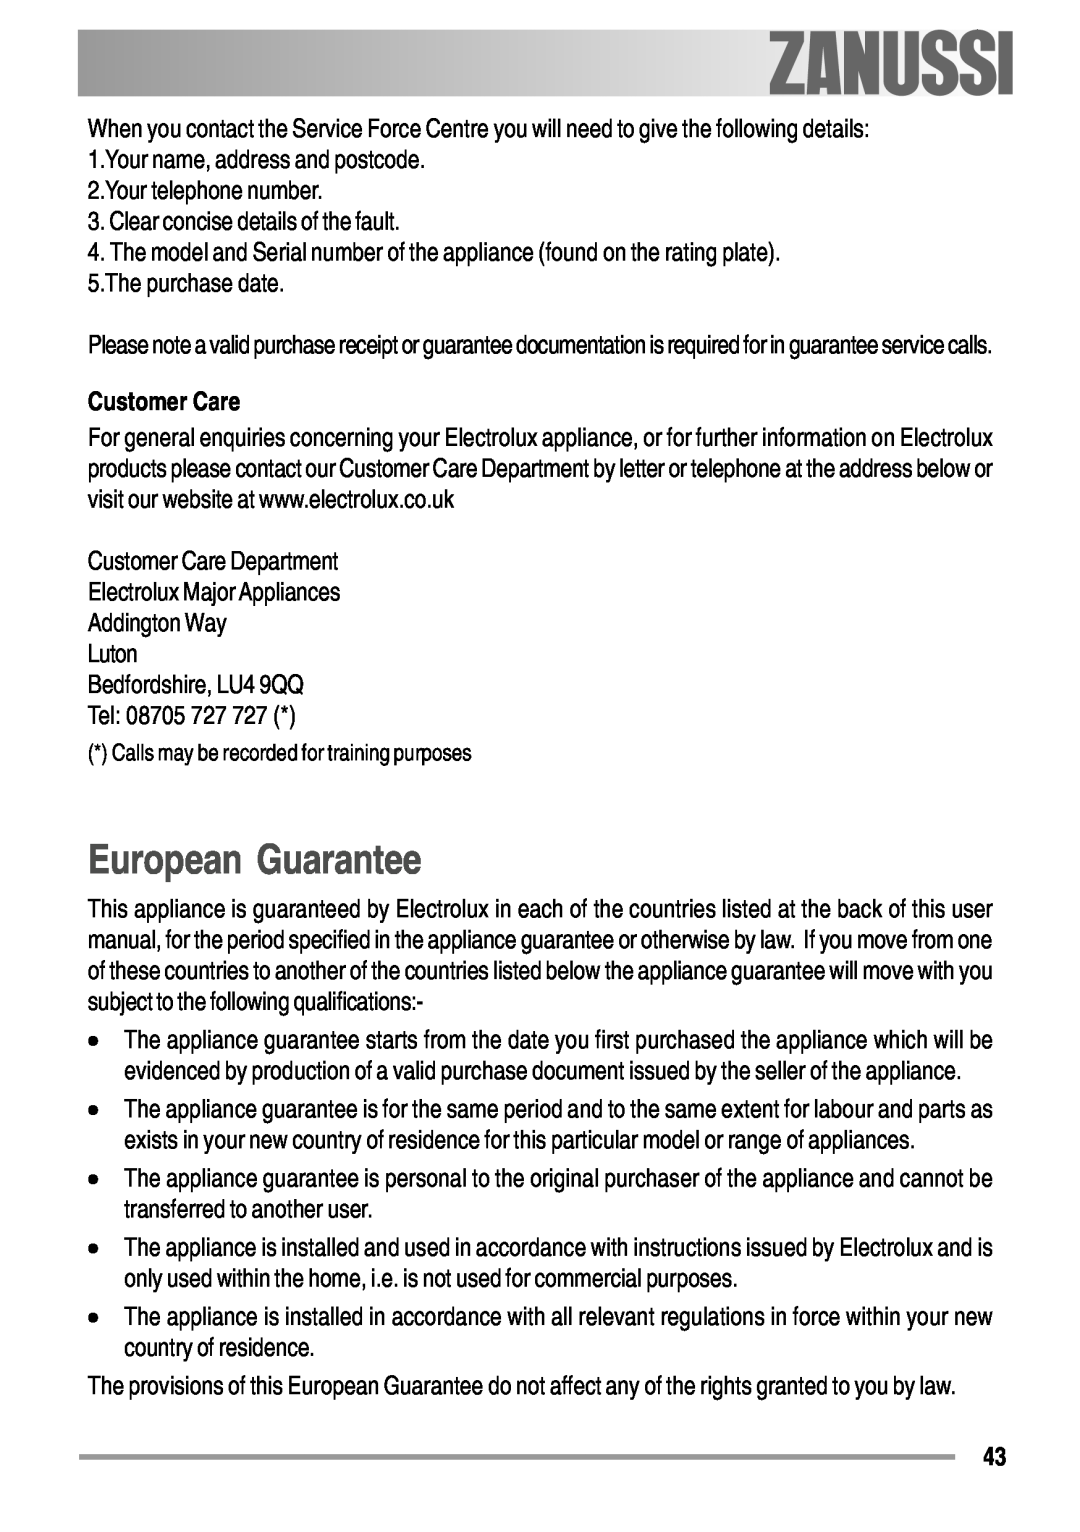 Zanussi ZYB 594 manual European Guarantee, Customer Care 